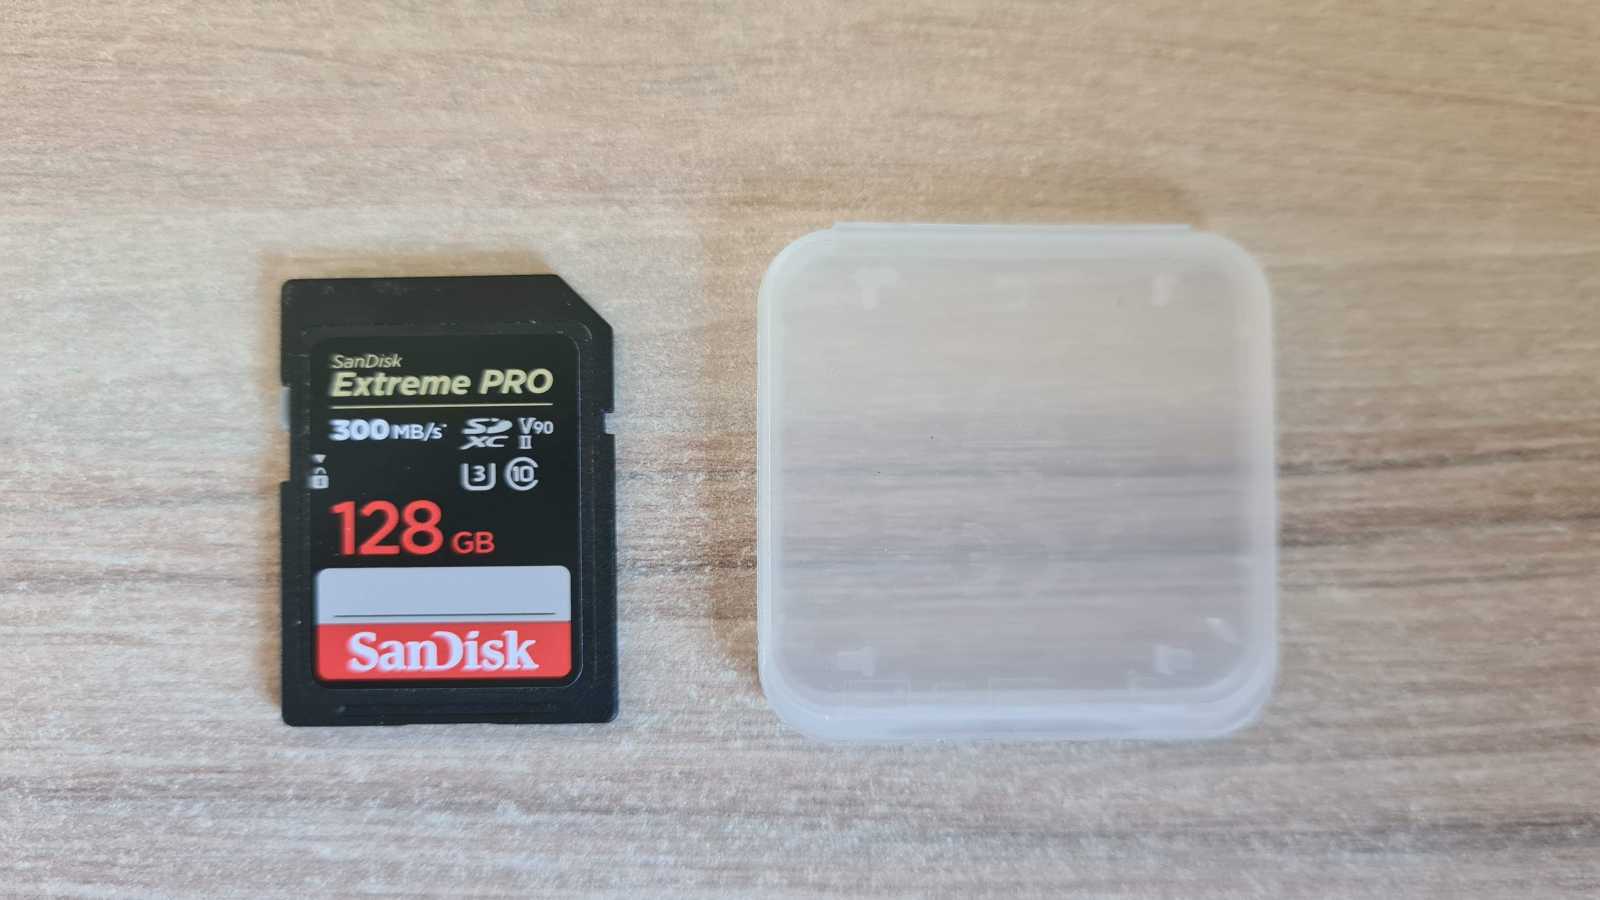  Velký test paměťových karet SD a microSD s kapacitou 128 GB